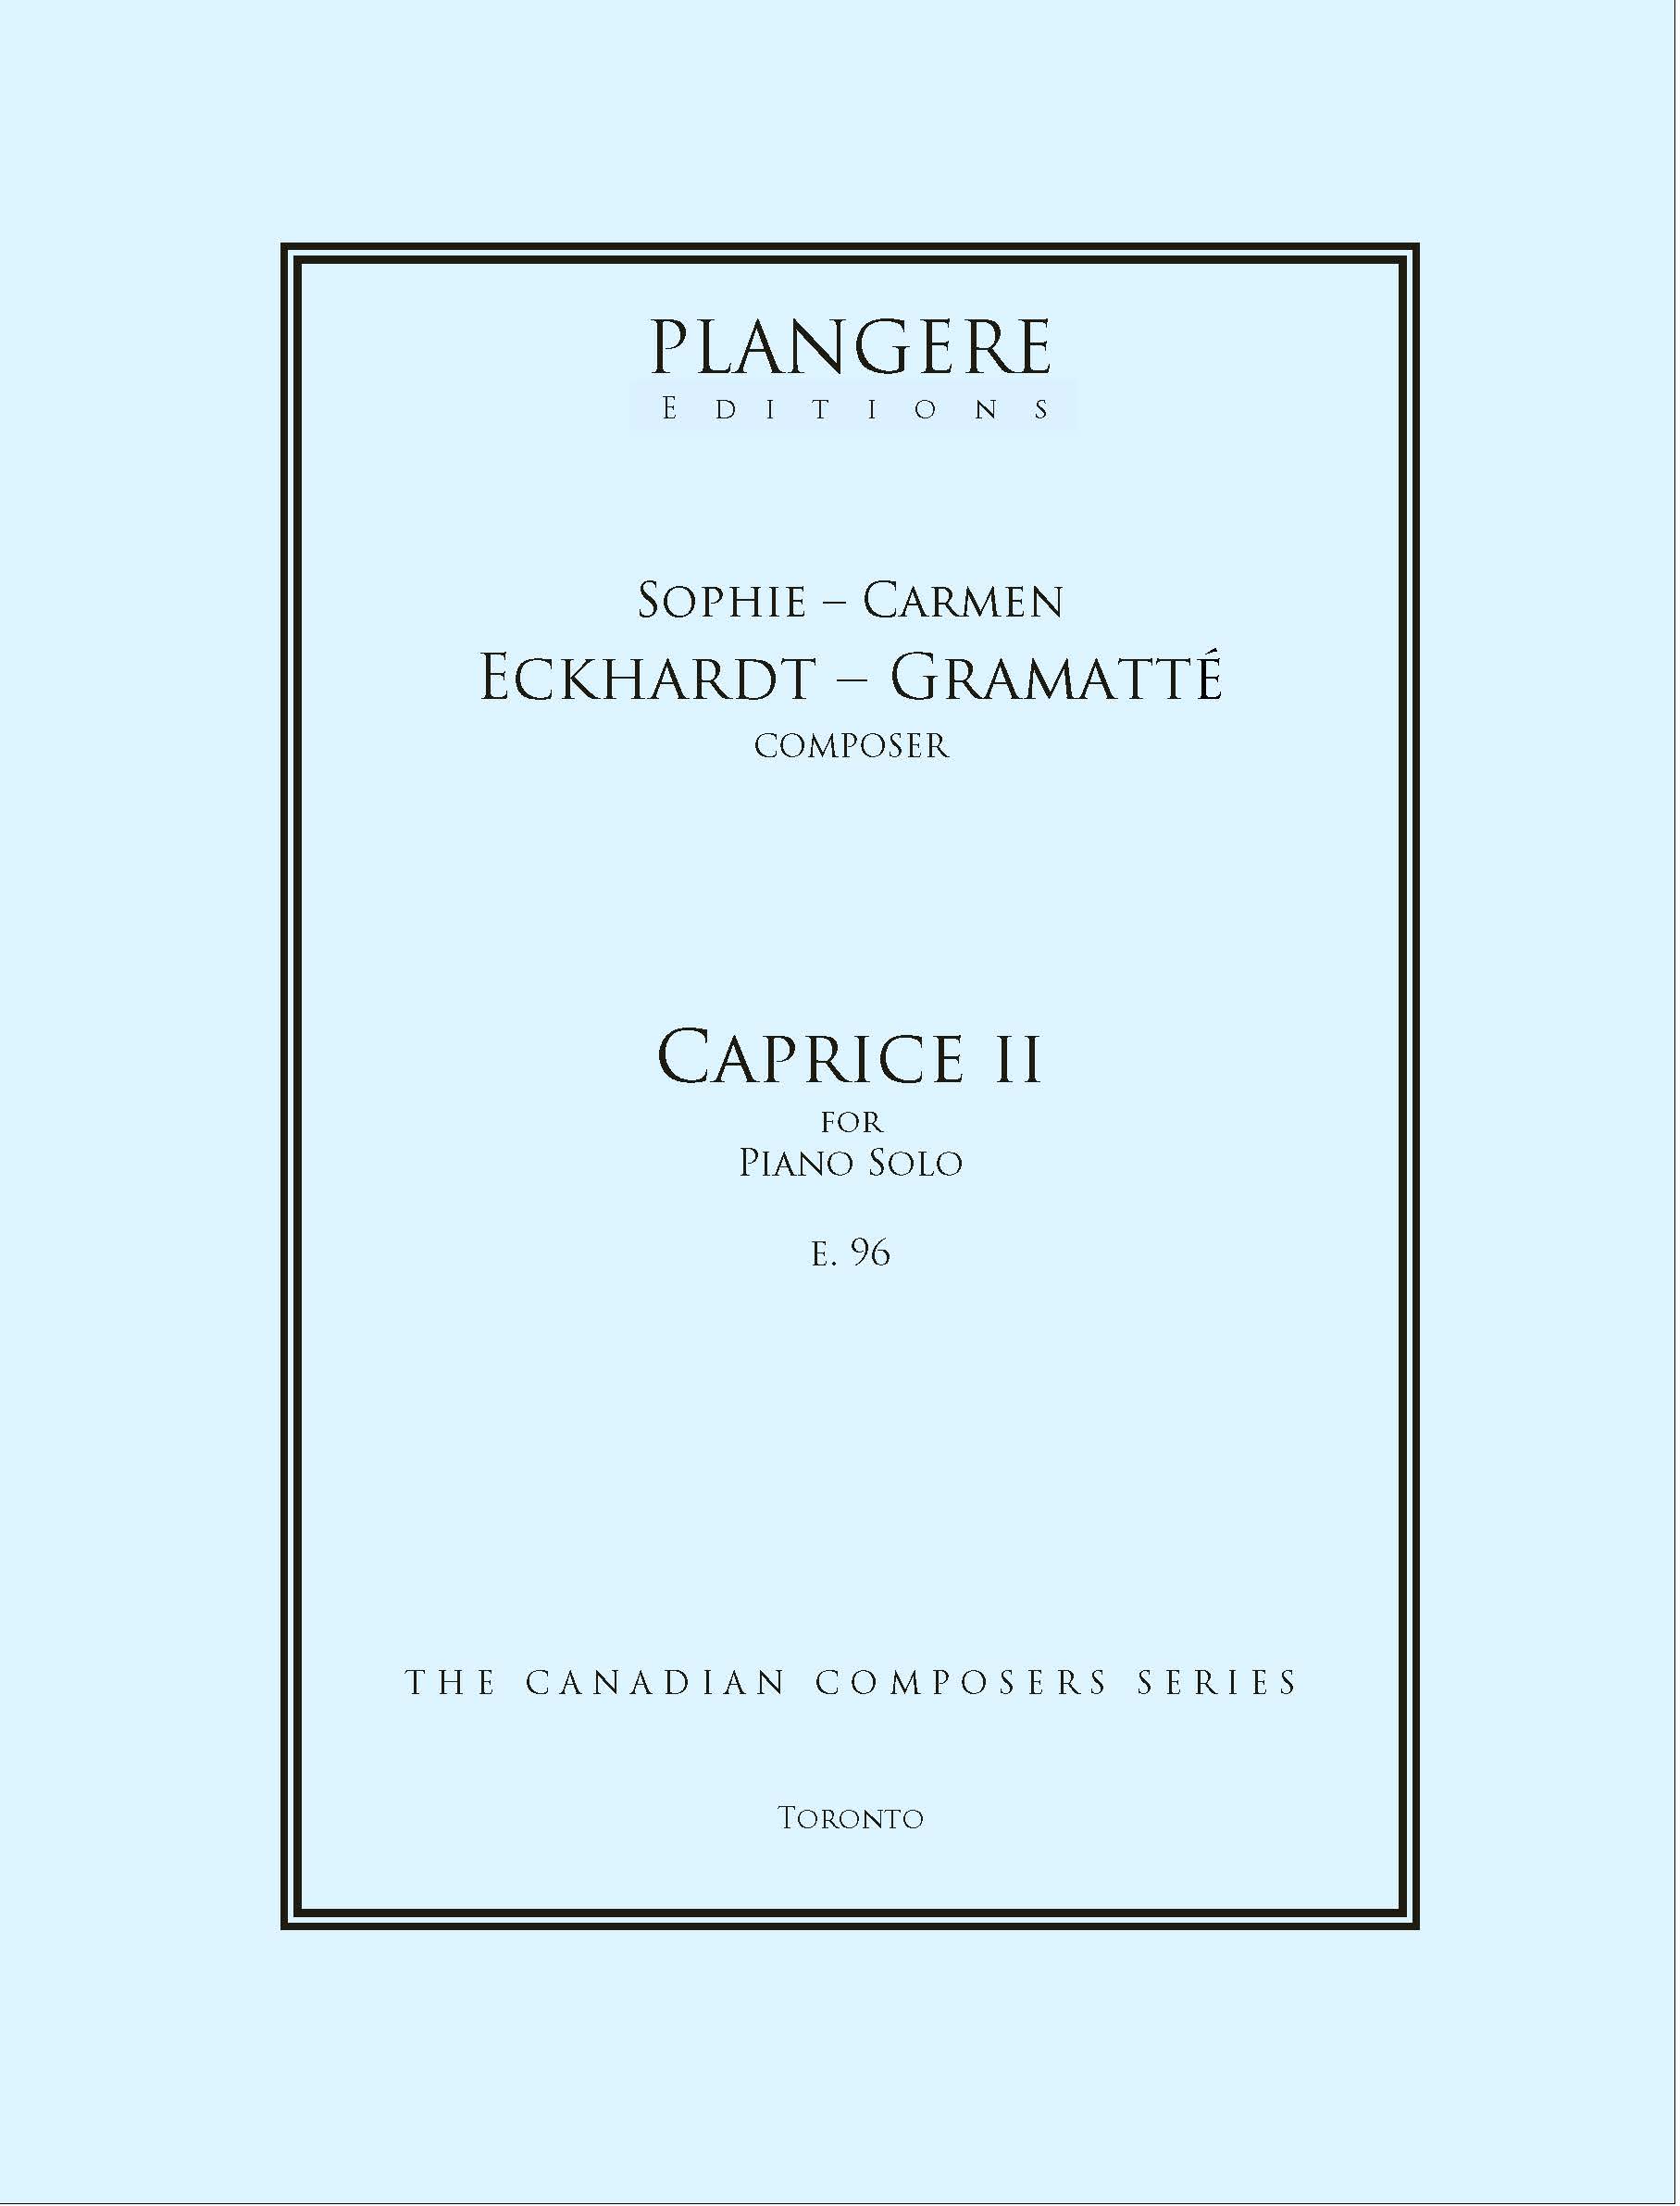 Sophie-Carmen Eckhardt- Gramatté    Caprice II for Piano   E. 96